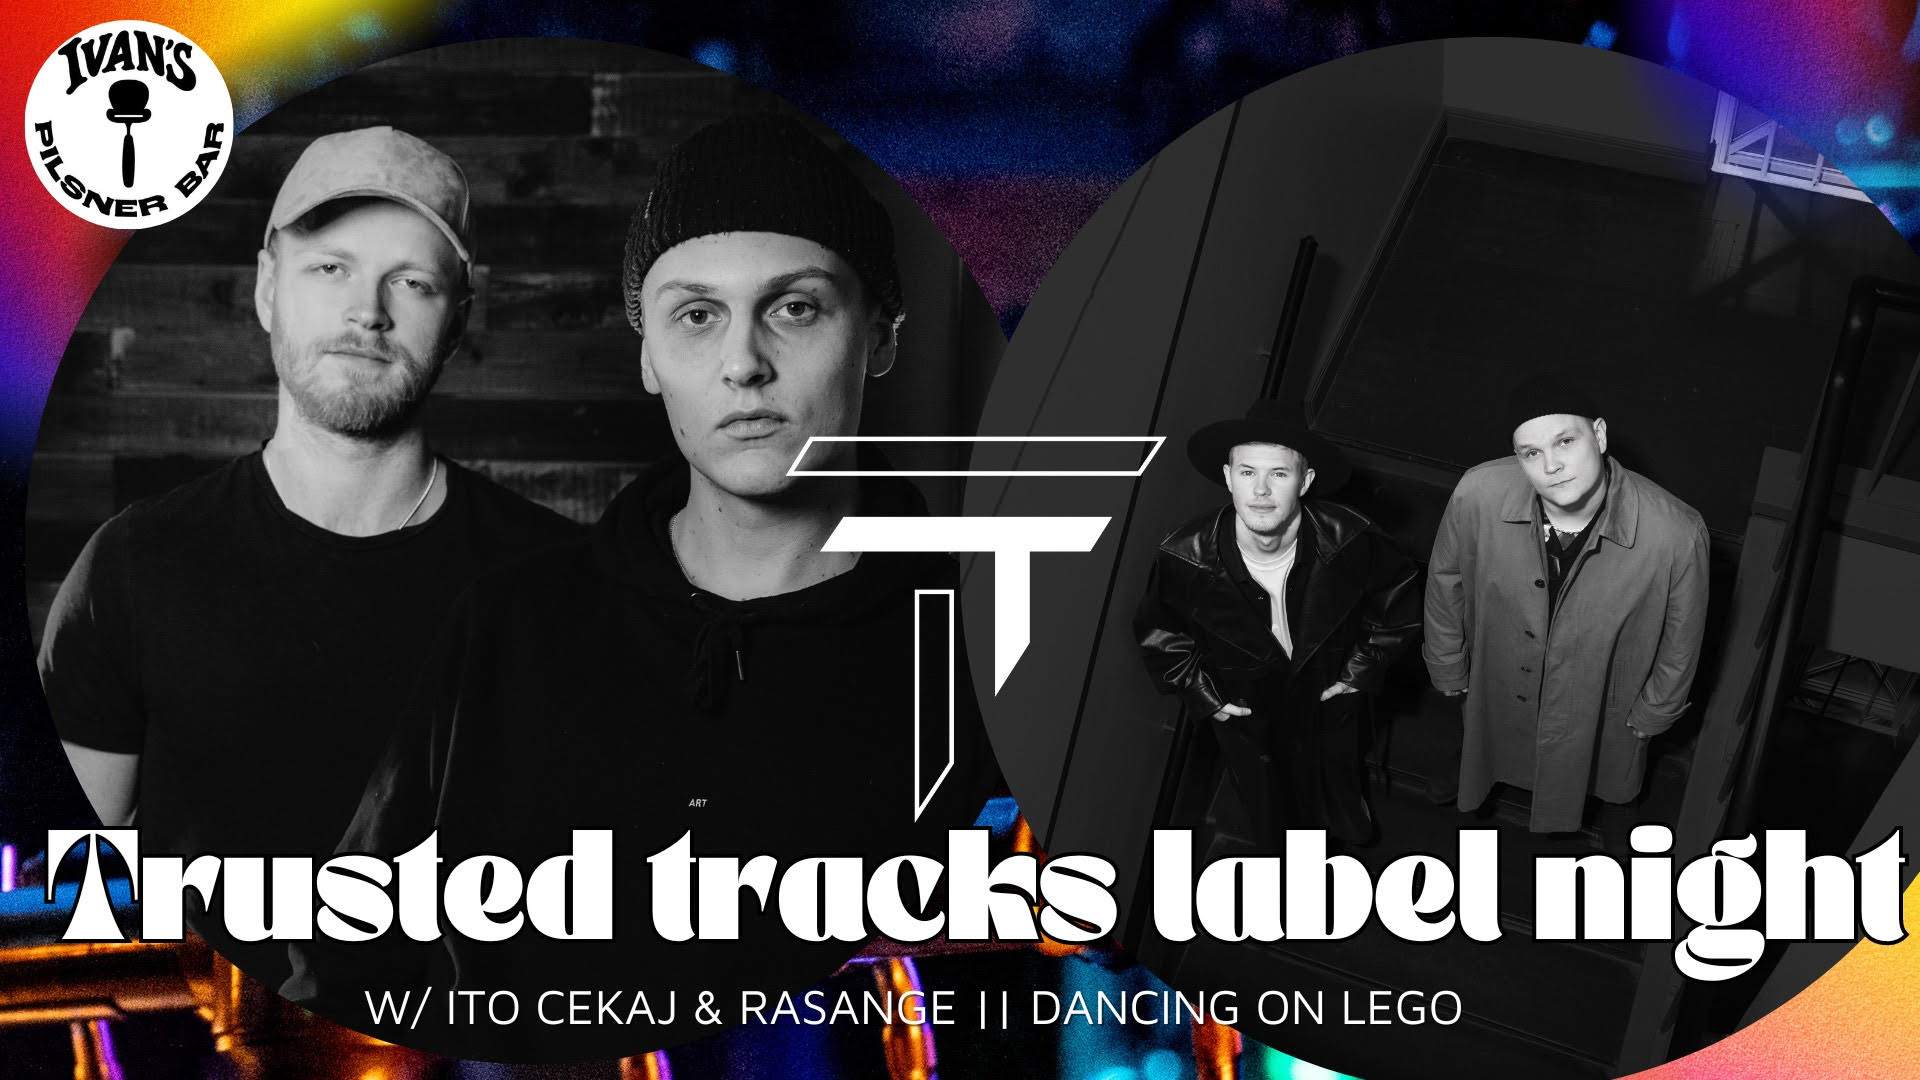 Trusted tracks label night [Ito Cekaj & Dancing on Lego] - フライヤー表